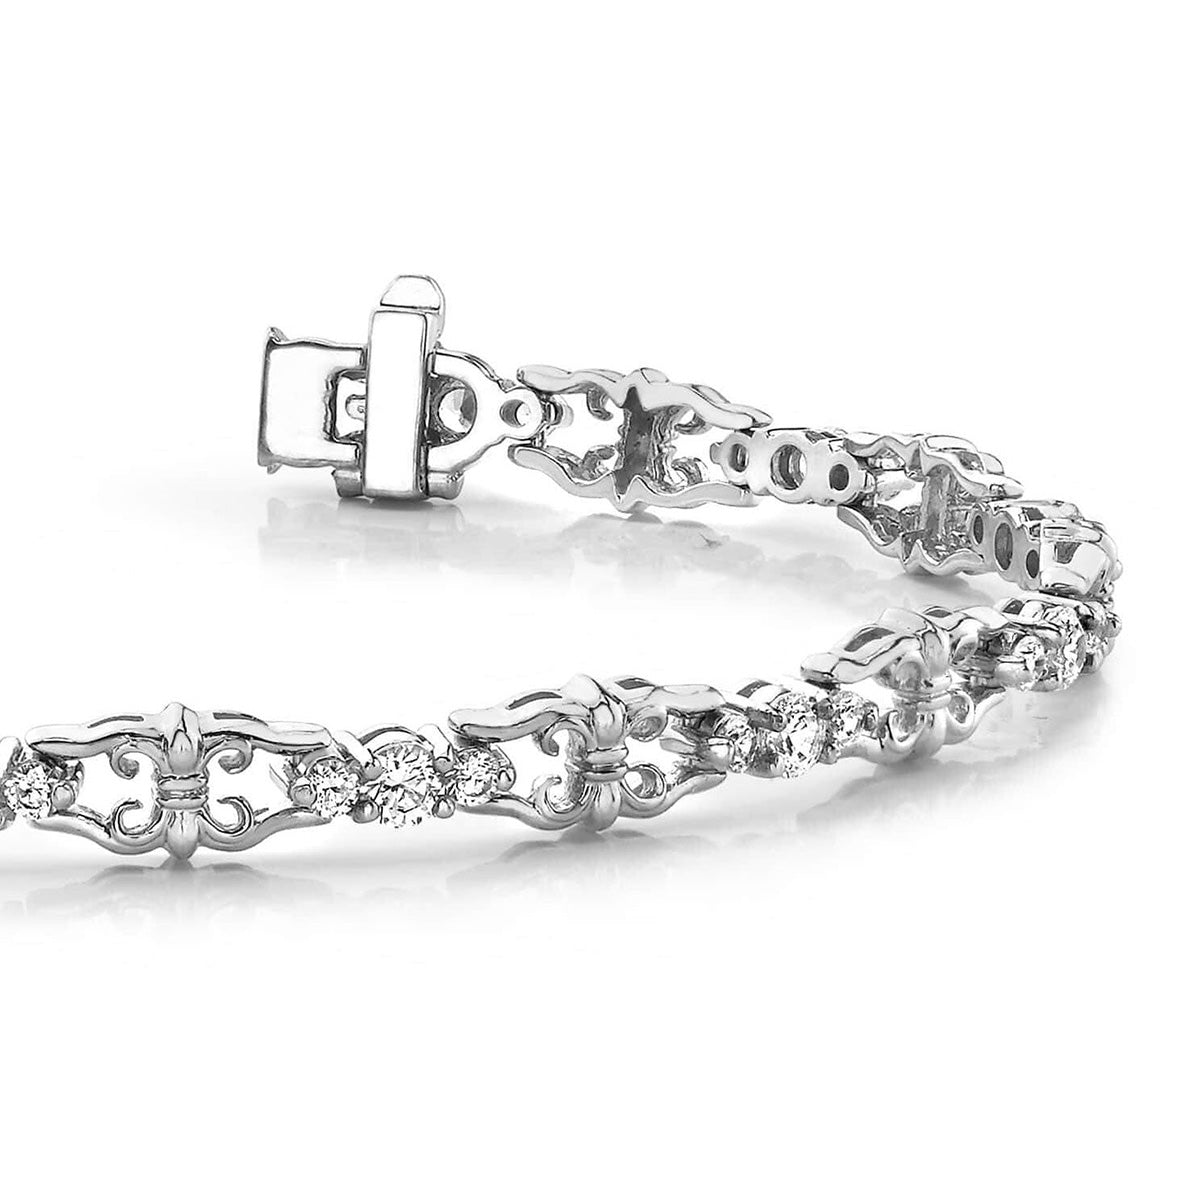 Three Across Crown Link Diamond Bracelet